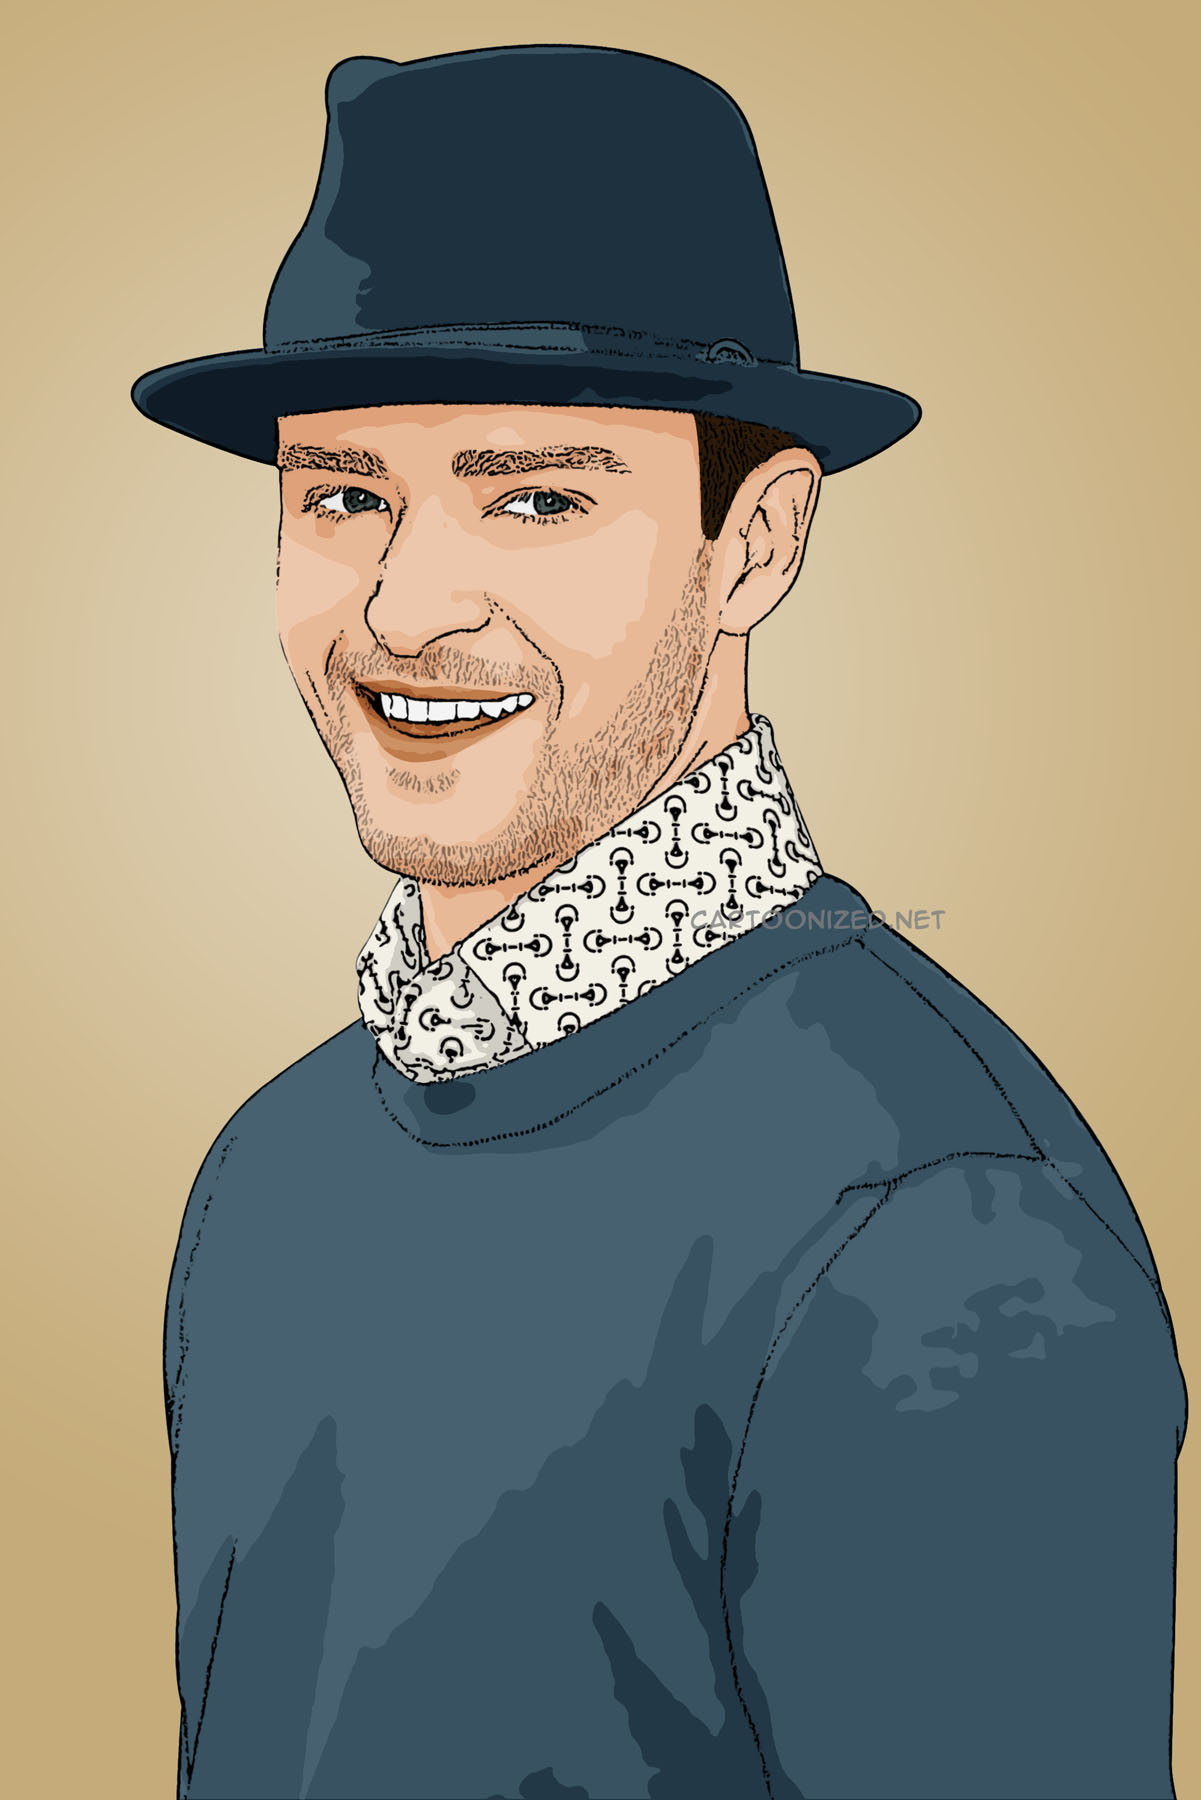 Photo Cartoon of Justin Timberlake (3) - Cartoonized